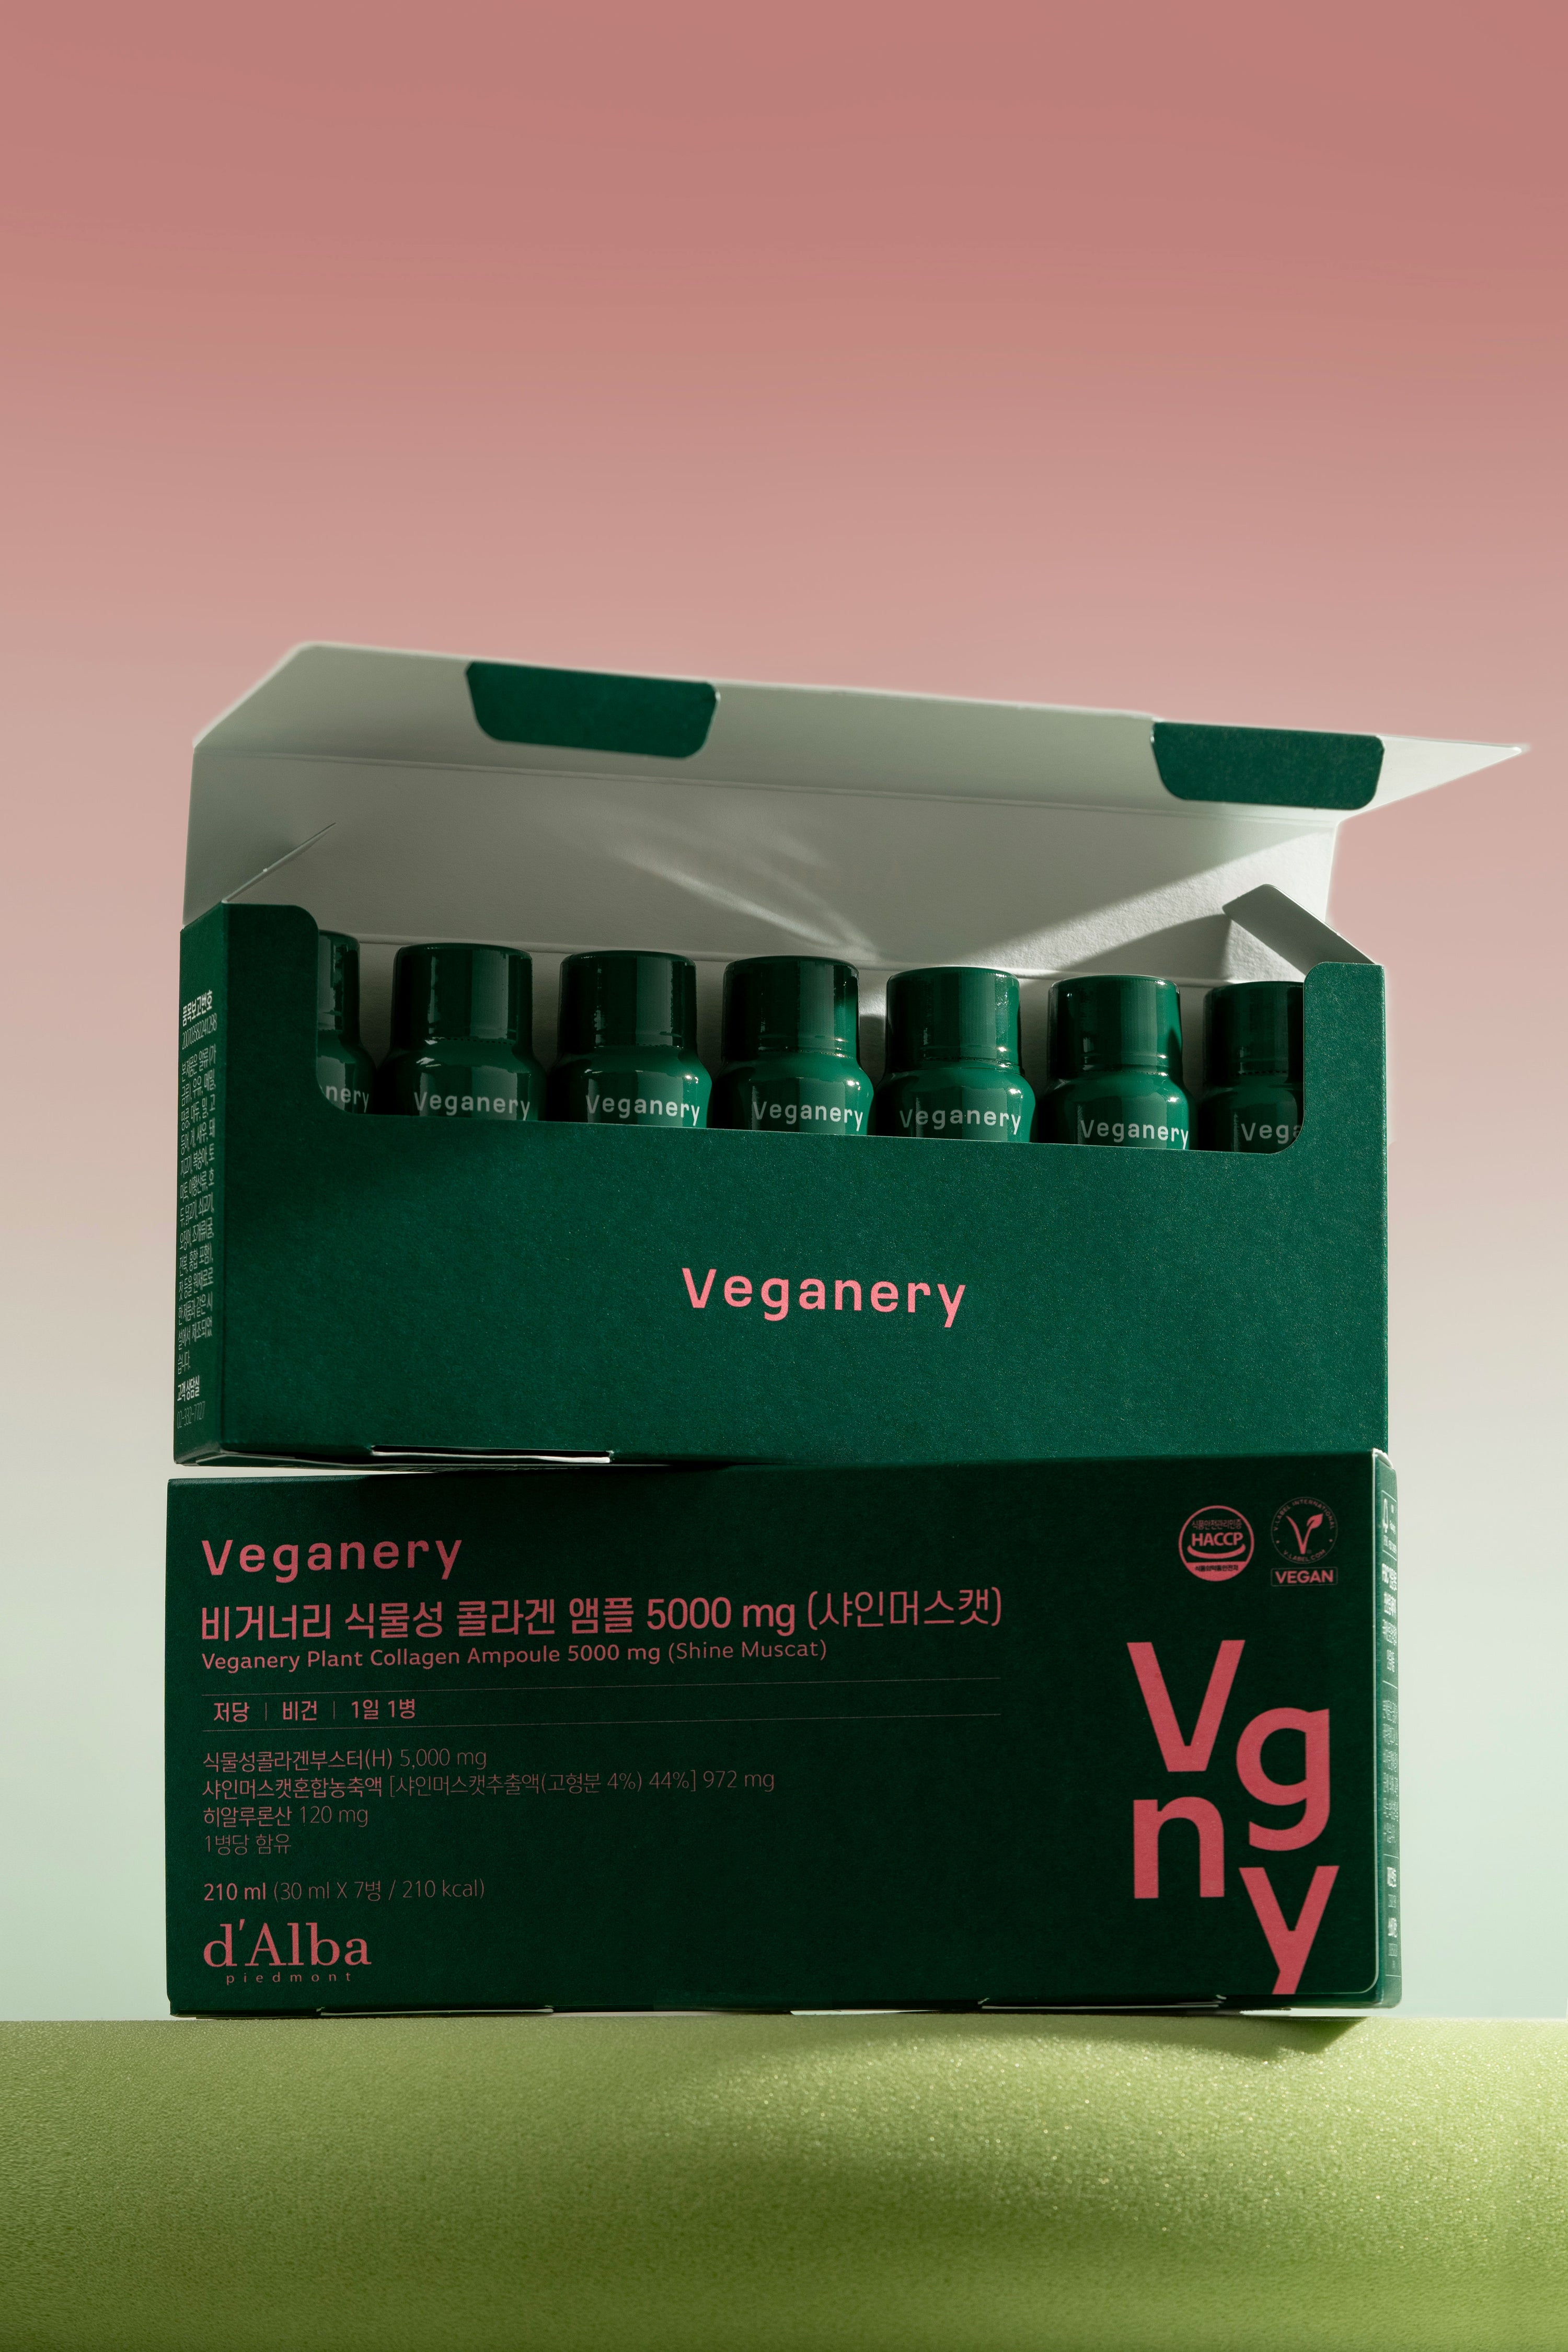 D'ALBA Veganery Plant Collagen Ampoule 5,000mg 1BOX (30ml x 7ea) - Shine Muscat Flavor - DODOSKIN